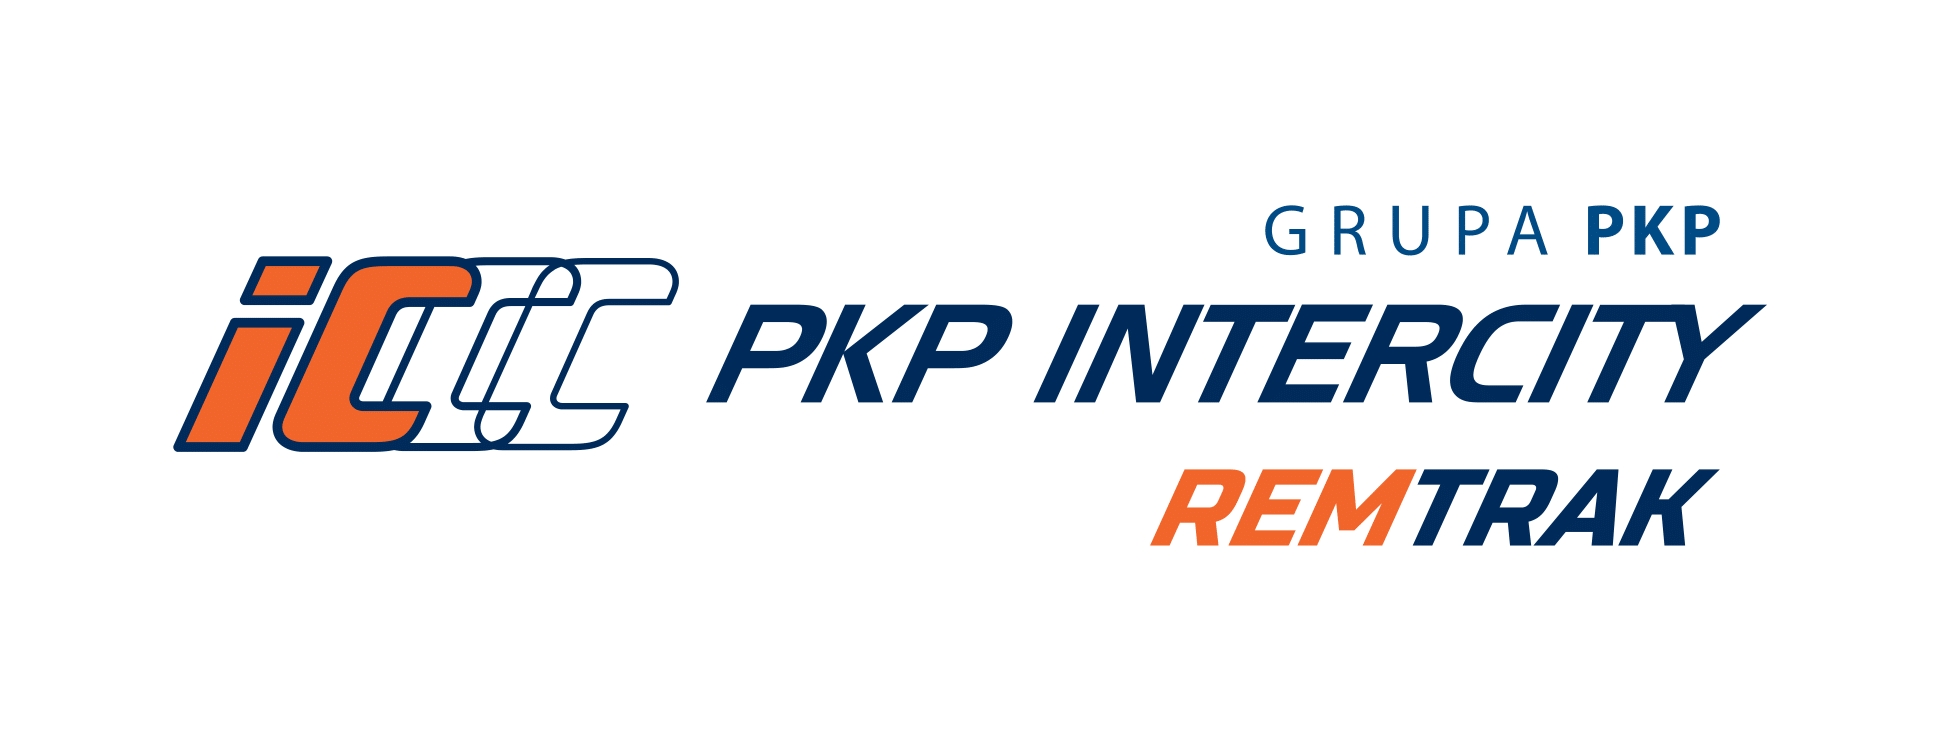 Logo firmy PKP Intercity Remtrak